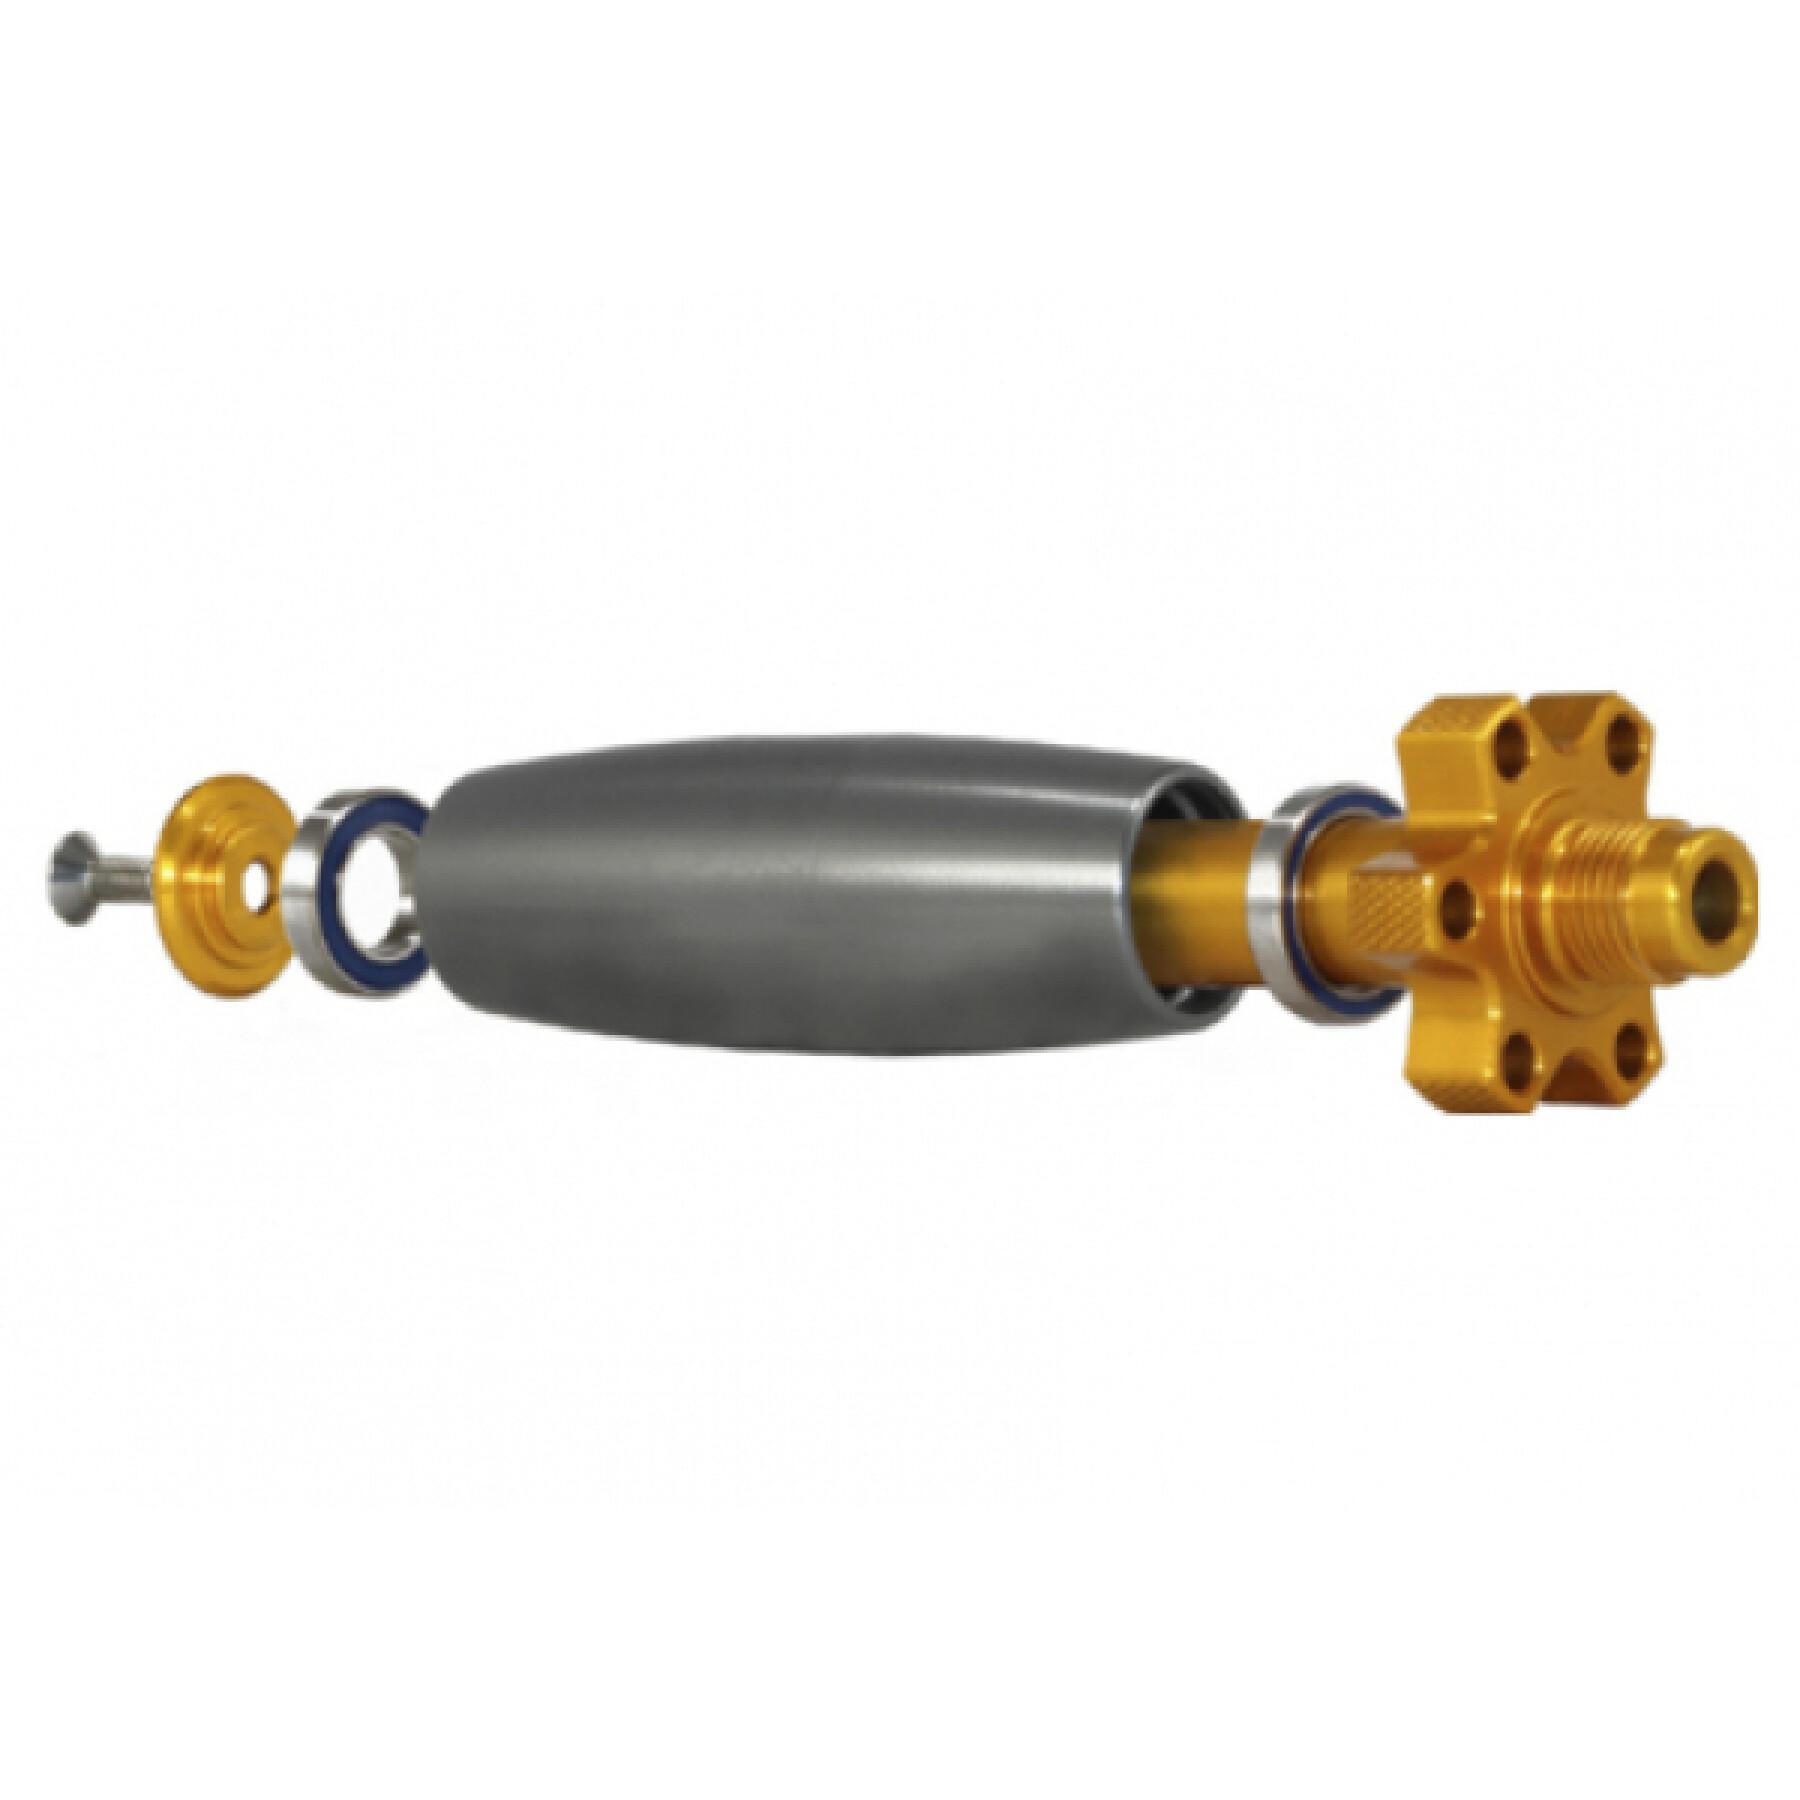 Werkzeug für die Kurbelgarnitur Enduro Bearings Tool-Pedal Dummy